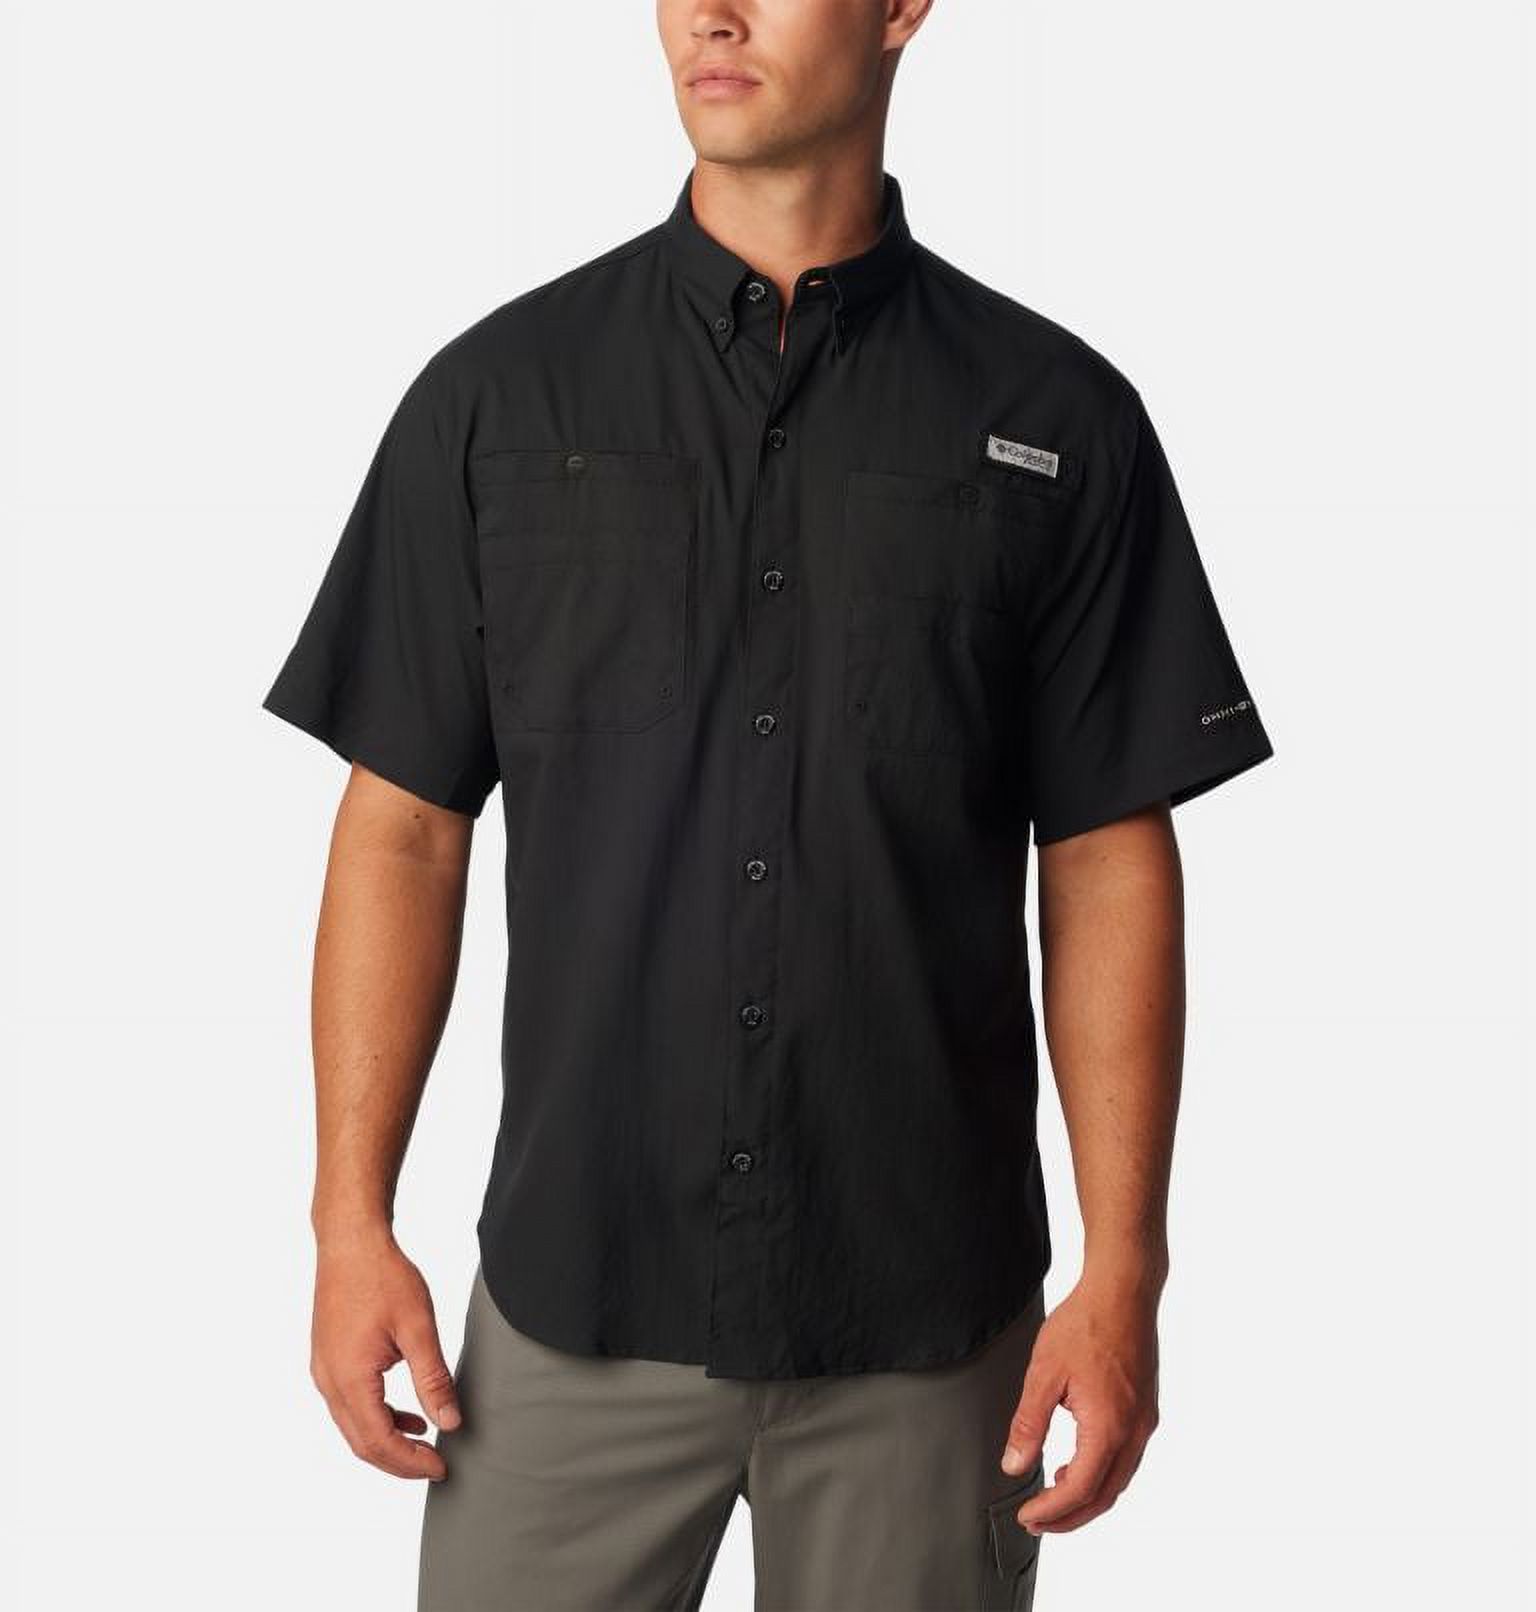 Mens PFG Tamiami II Short Sleeve Shirt - Tall - image 1 of 9